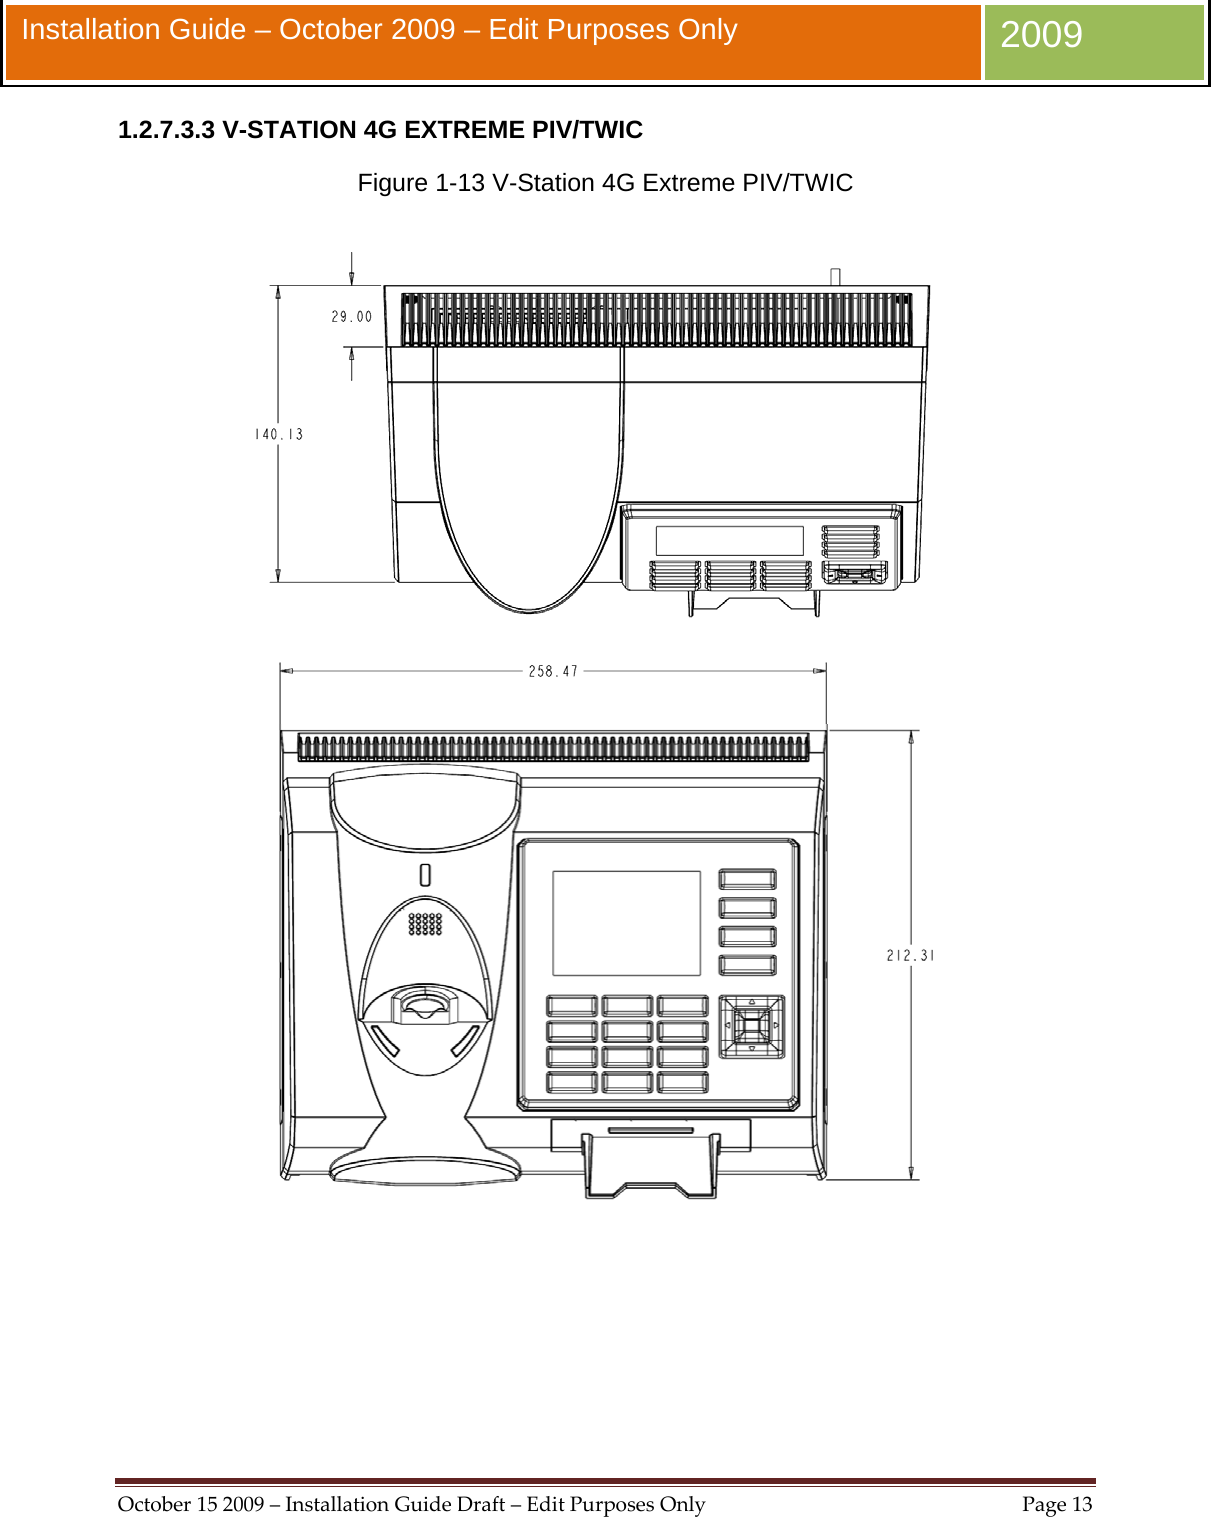  October152009–InstallationGuideDraft–EditPurposesOnlyPage13 Installation Guide – October 2009 – Edit Purposes Only  2009 1.2.7.3.3 V-STATION 4G EXTREME PIV/TWIC Figure 1-13 V-Station 4G Extreme PIV/TWIC   